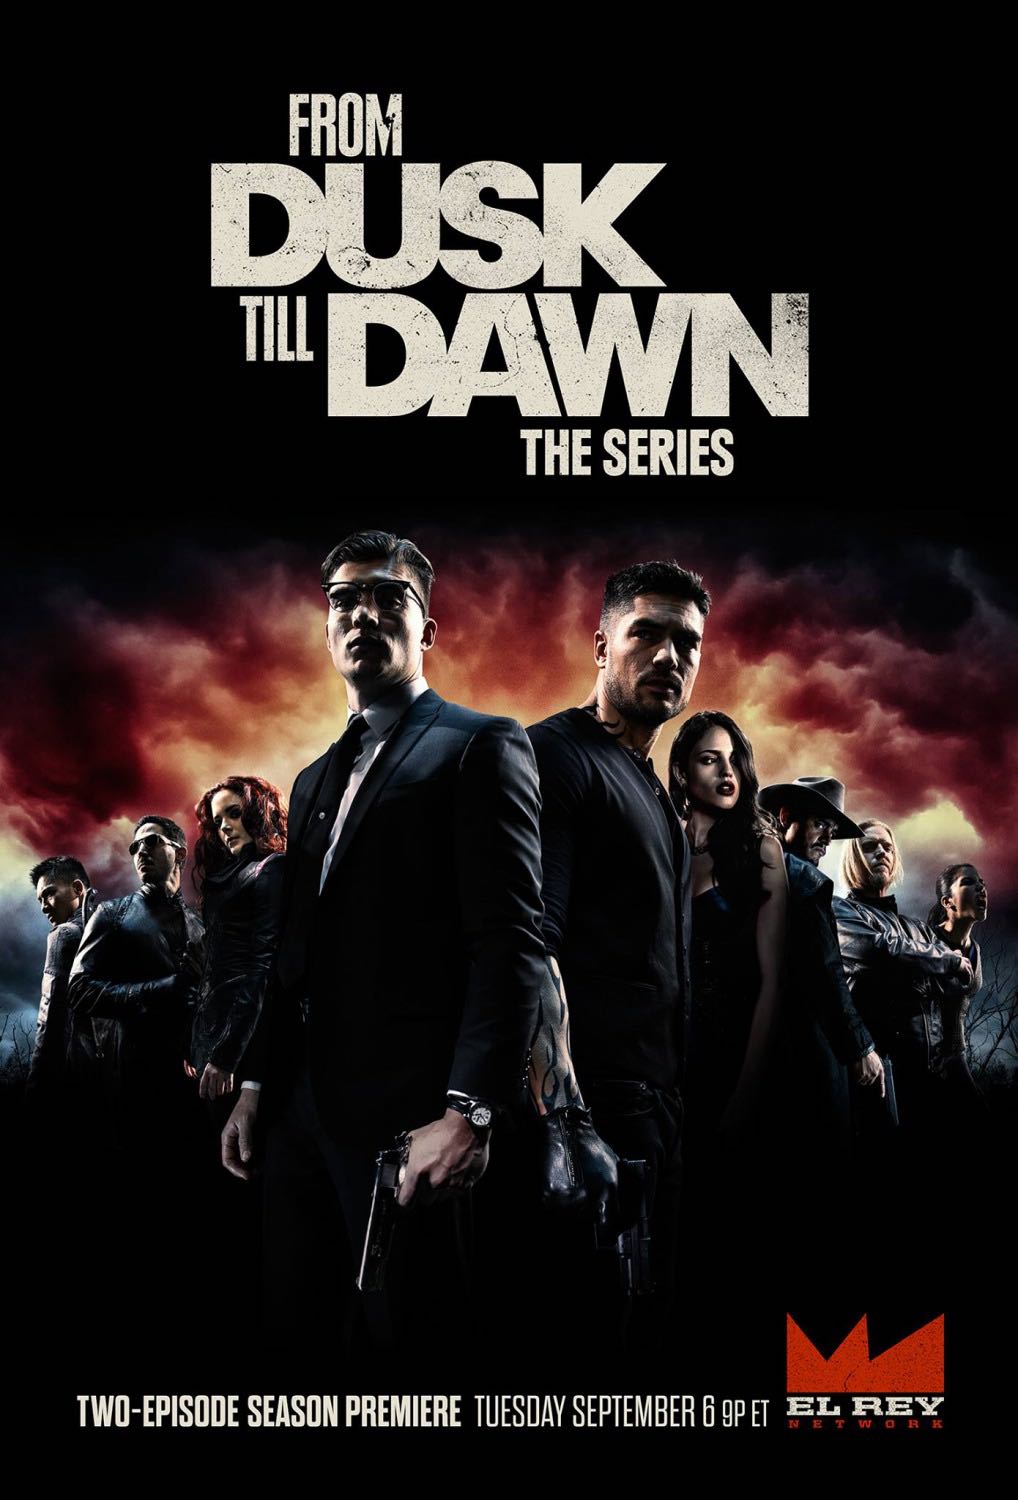 From Dusk till Dawn The Series 2016: Season 3